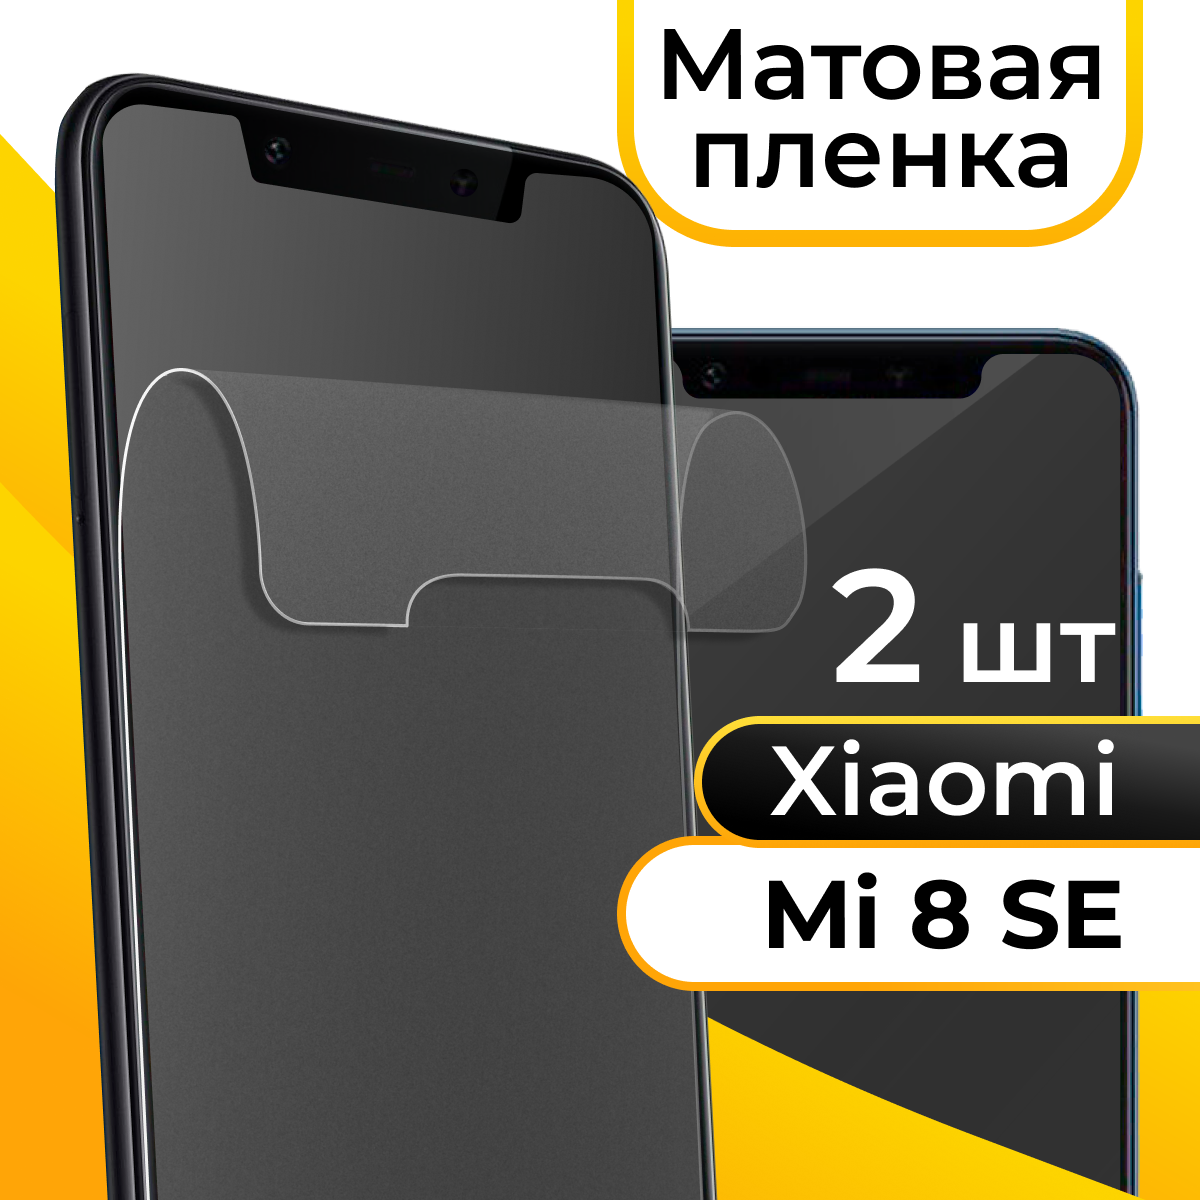 Матовая пленка для смартфона Xiaomi Mi 8 SE / Защитная противоударная пленка на телефон Сяоми Ми 8 СЕ / Гидрогелевая самовосстанавливающаяся пленка